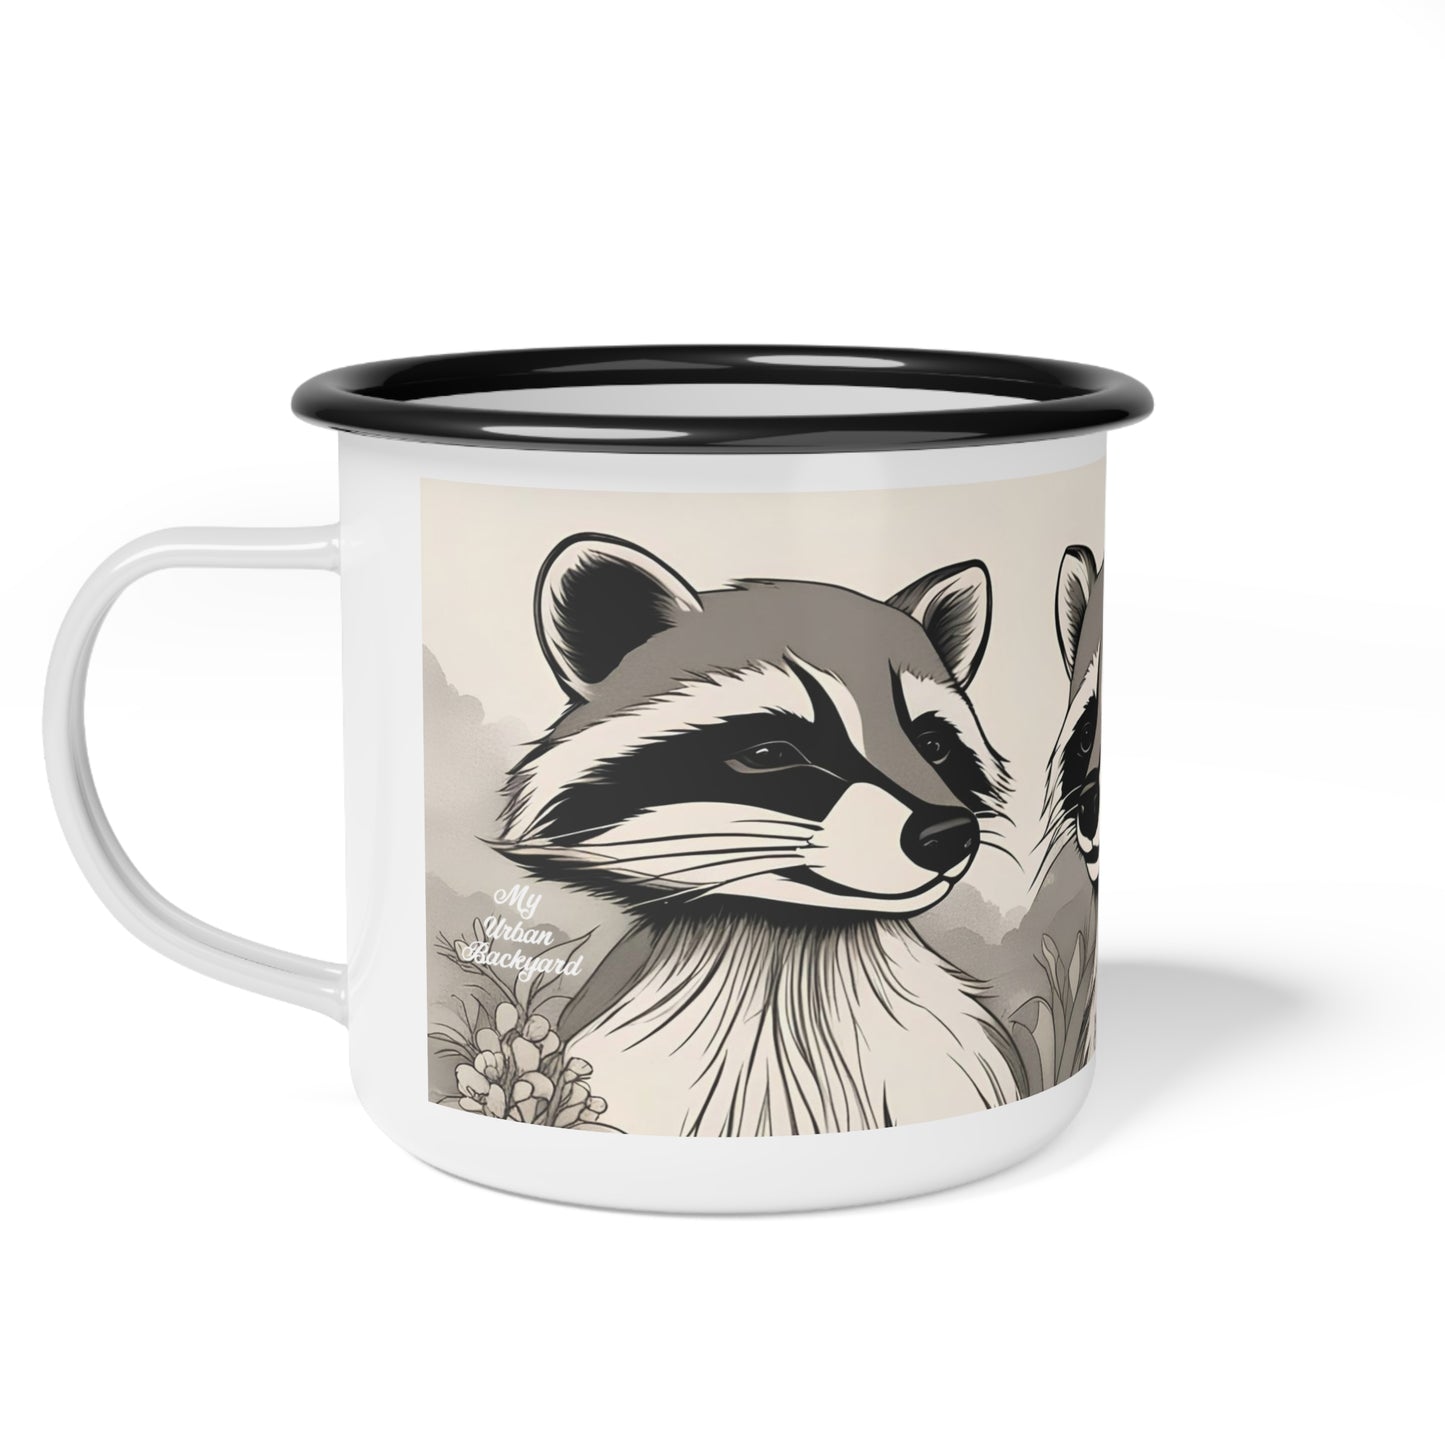 Three Raccoons, Enamel Camping Mug for Coffee, Tea, Cocoa, or Cereal - 12oz